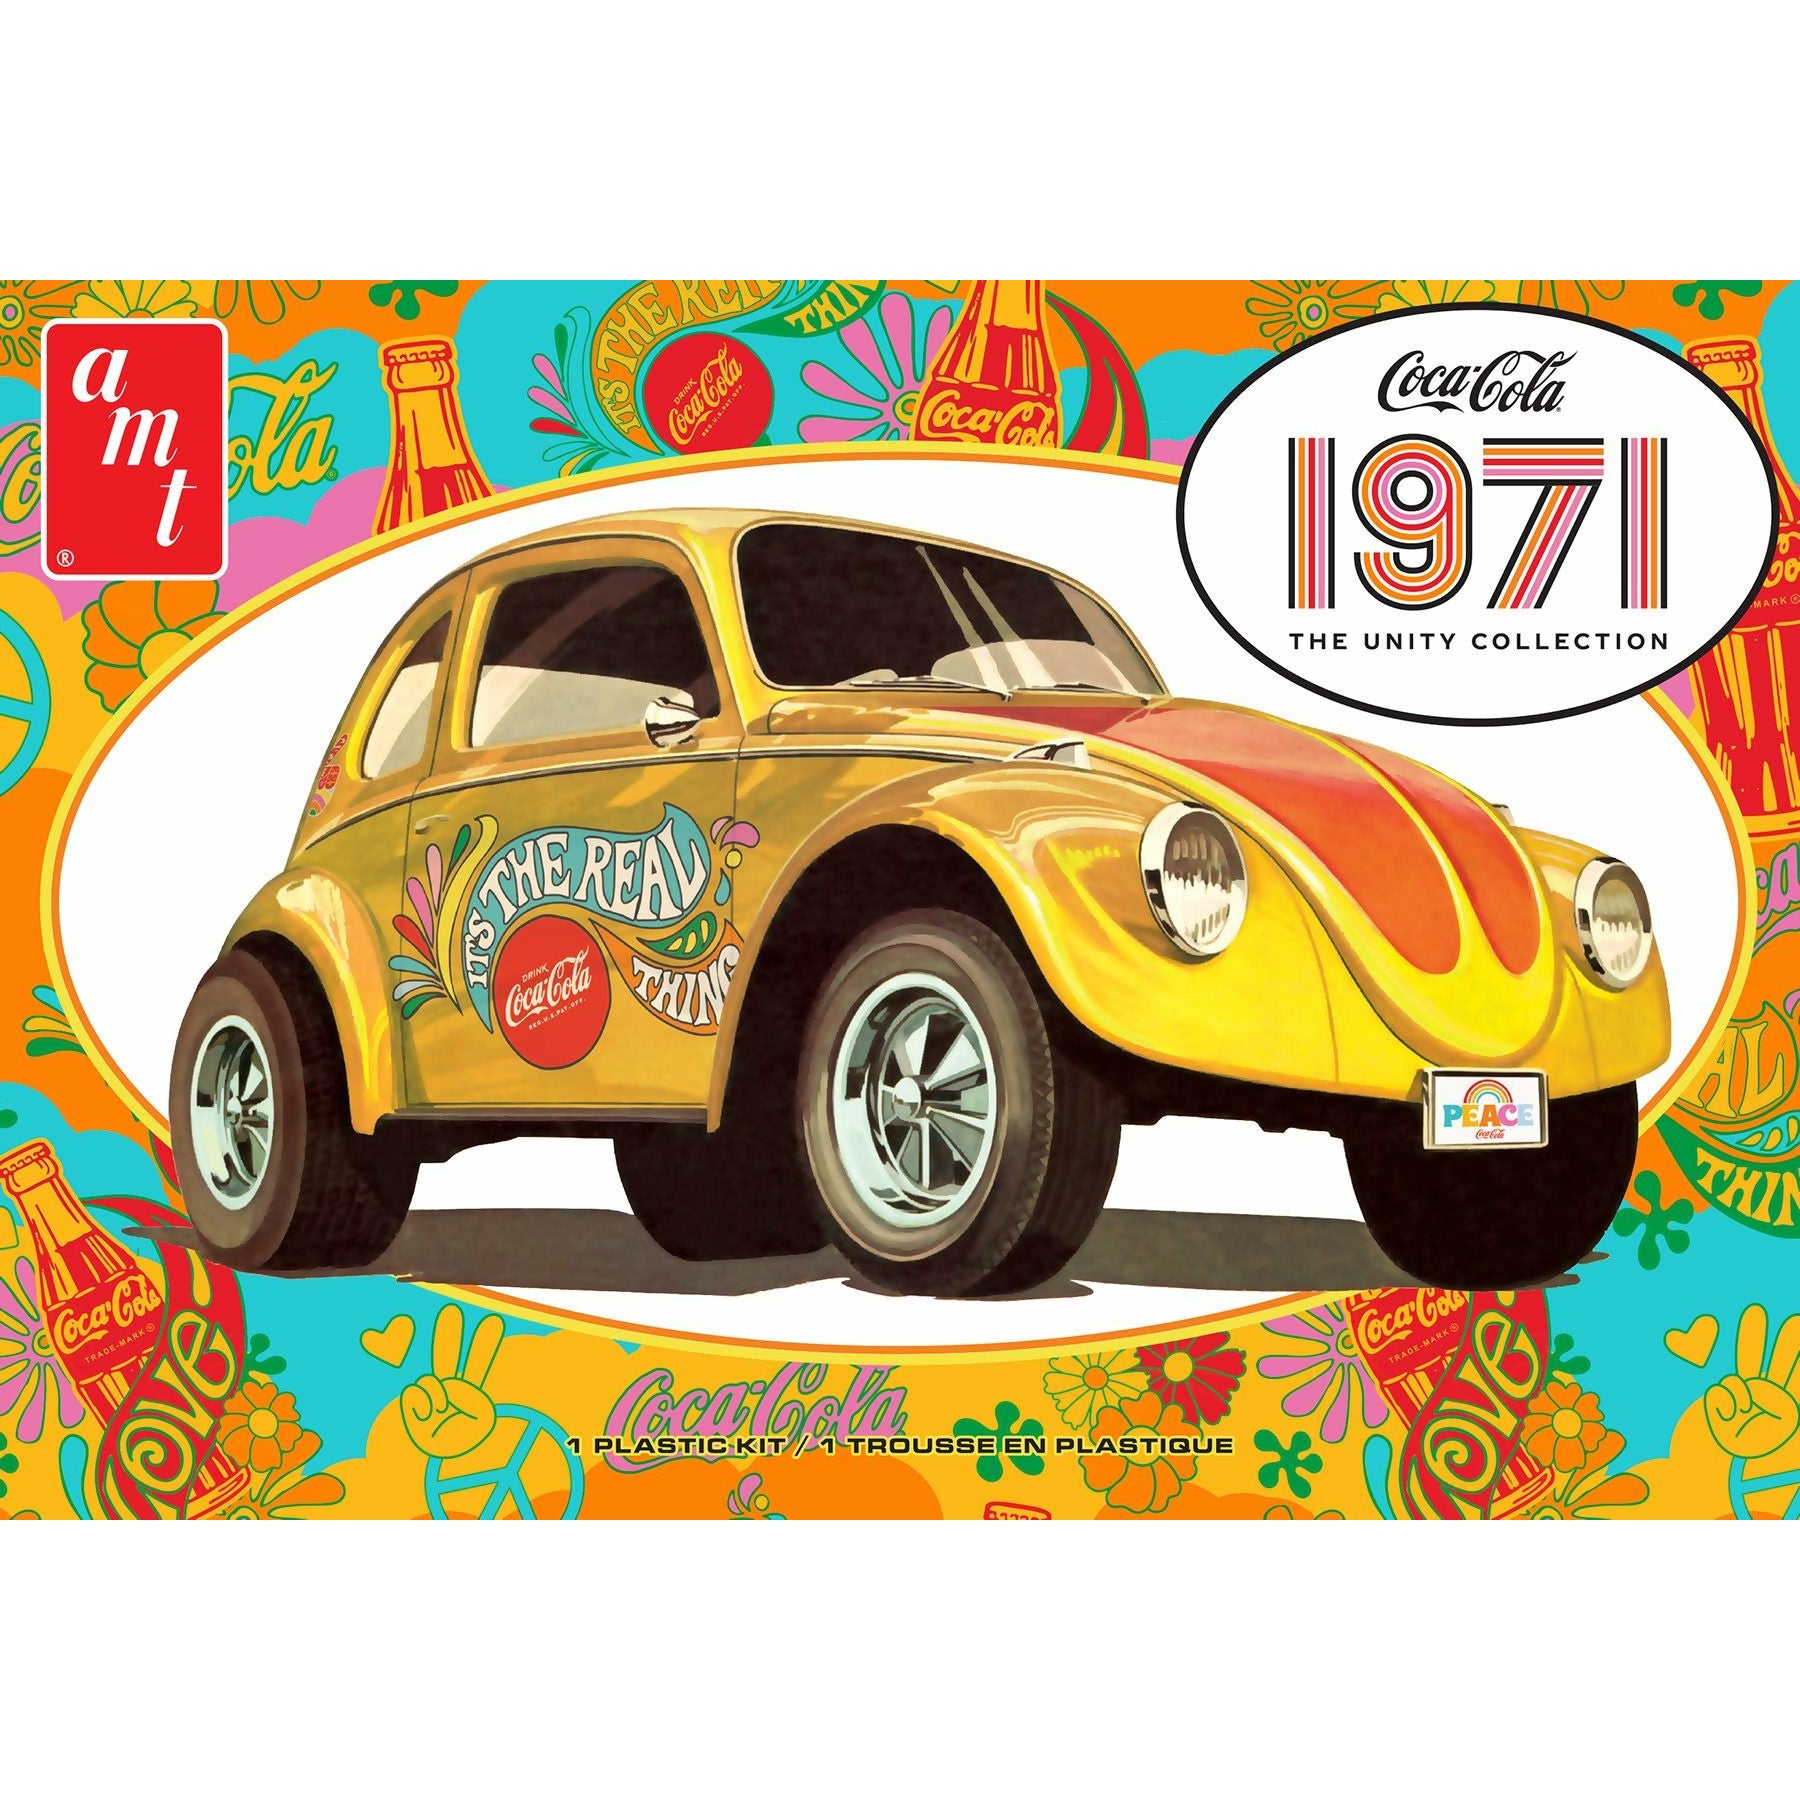 1971 Volkswagen Super Bug Unity Graphics (Coke) 1/25 Model Car Kit #1284 by AMT